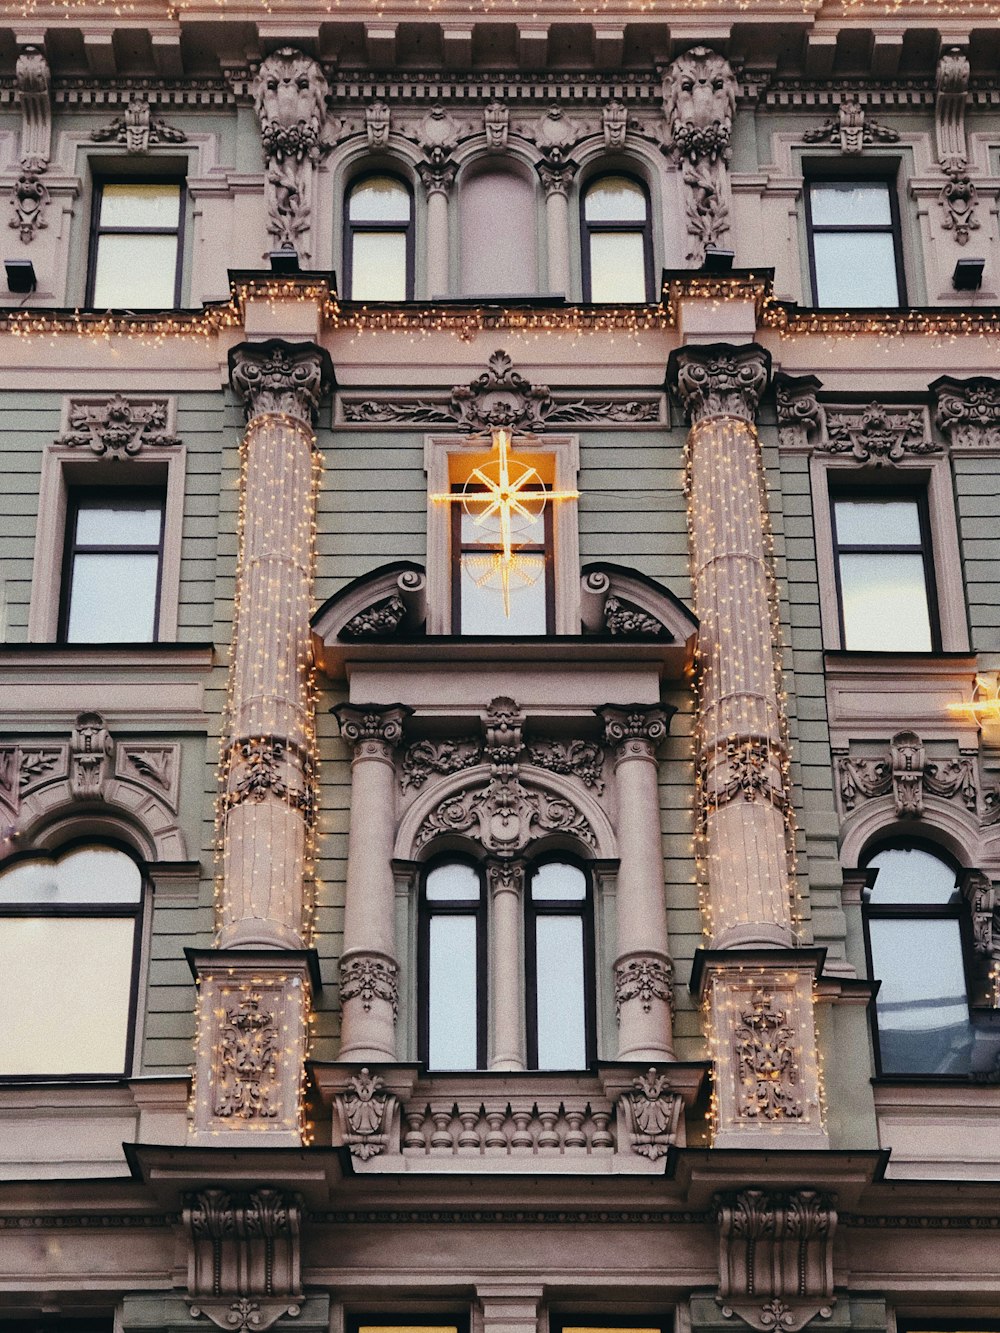 star window decor in building facade